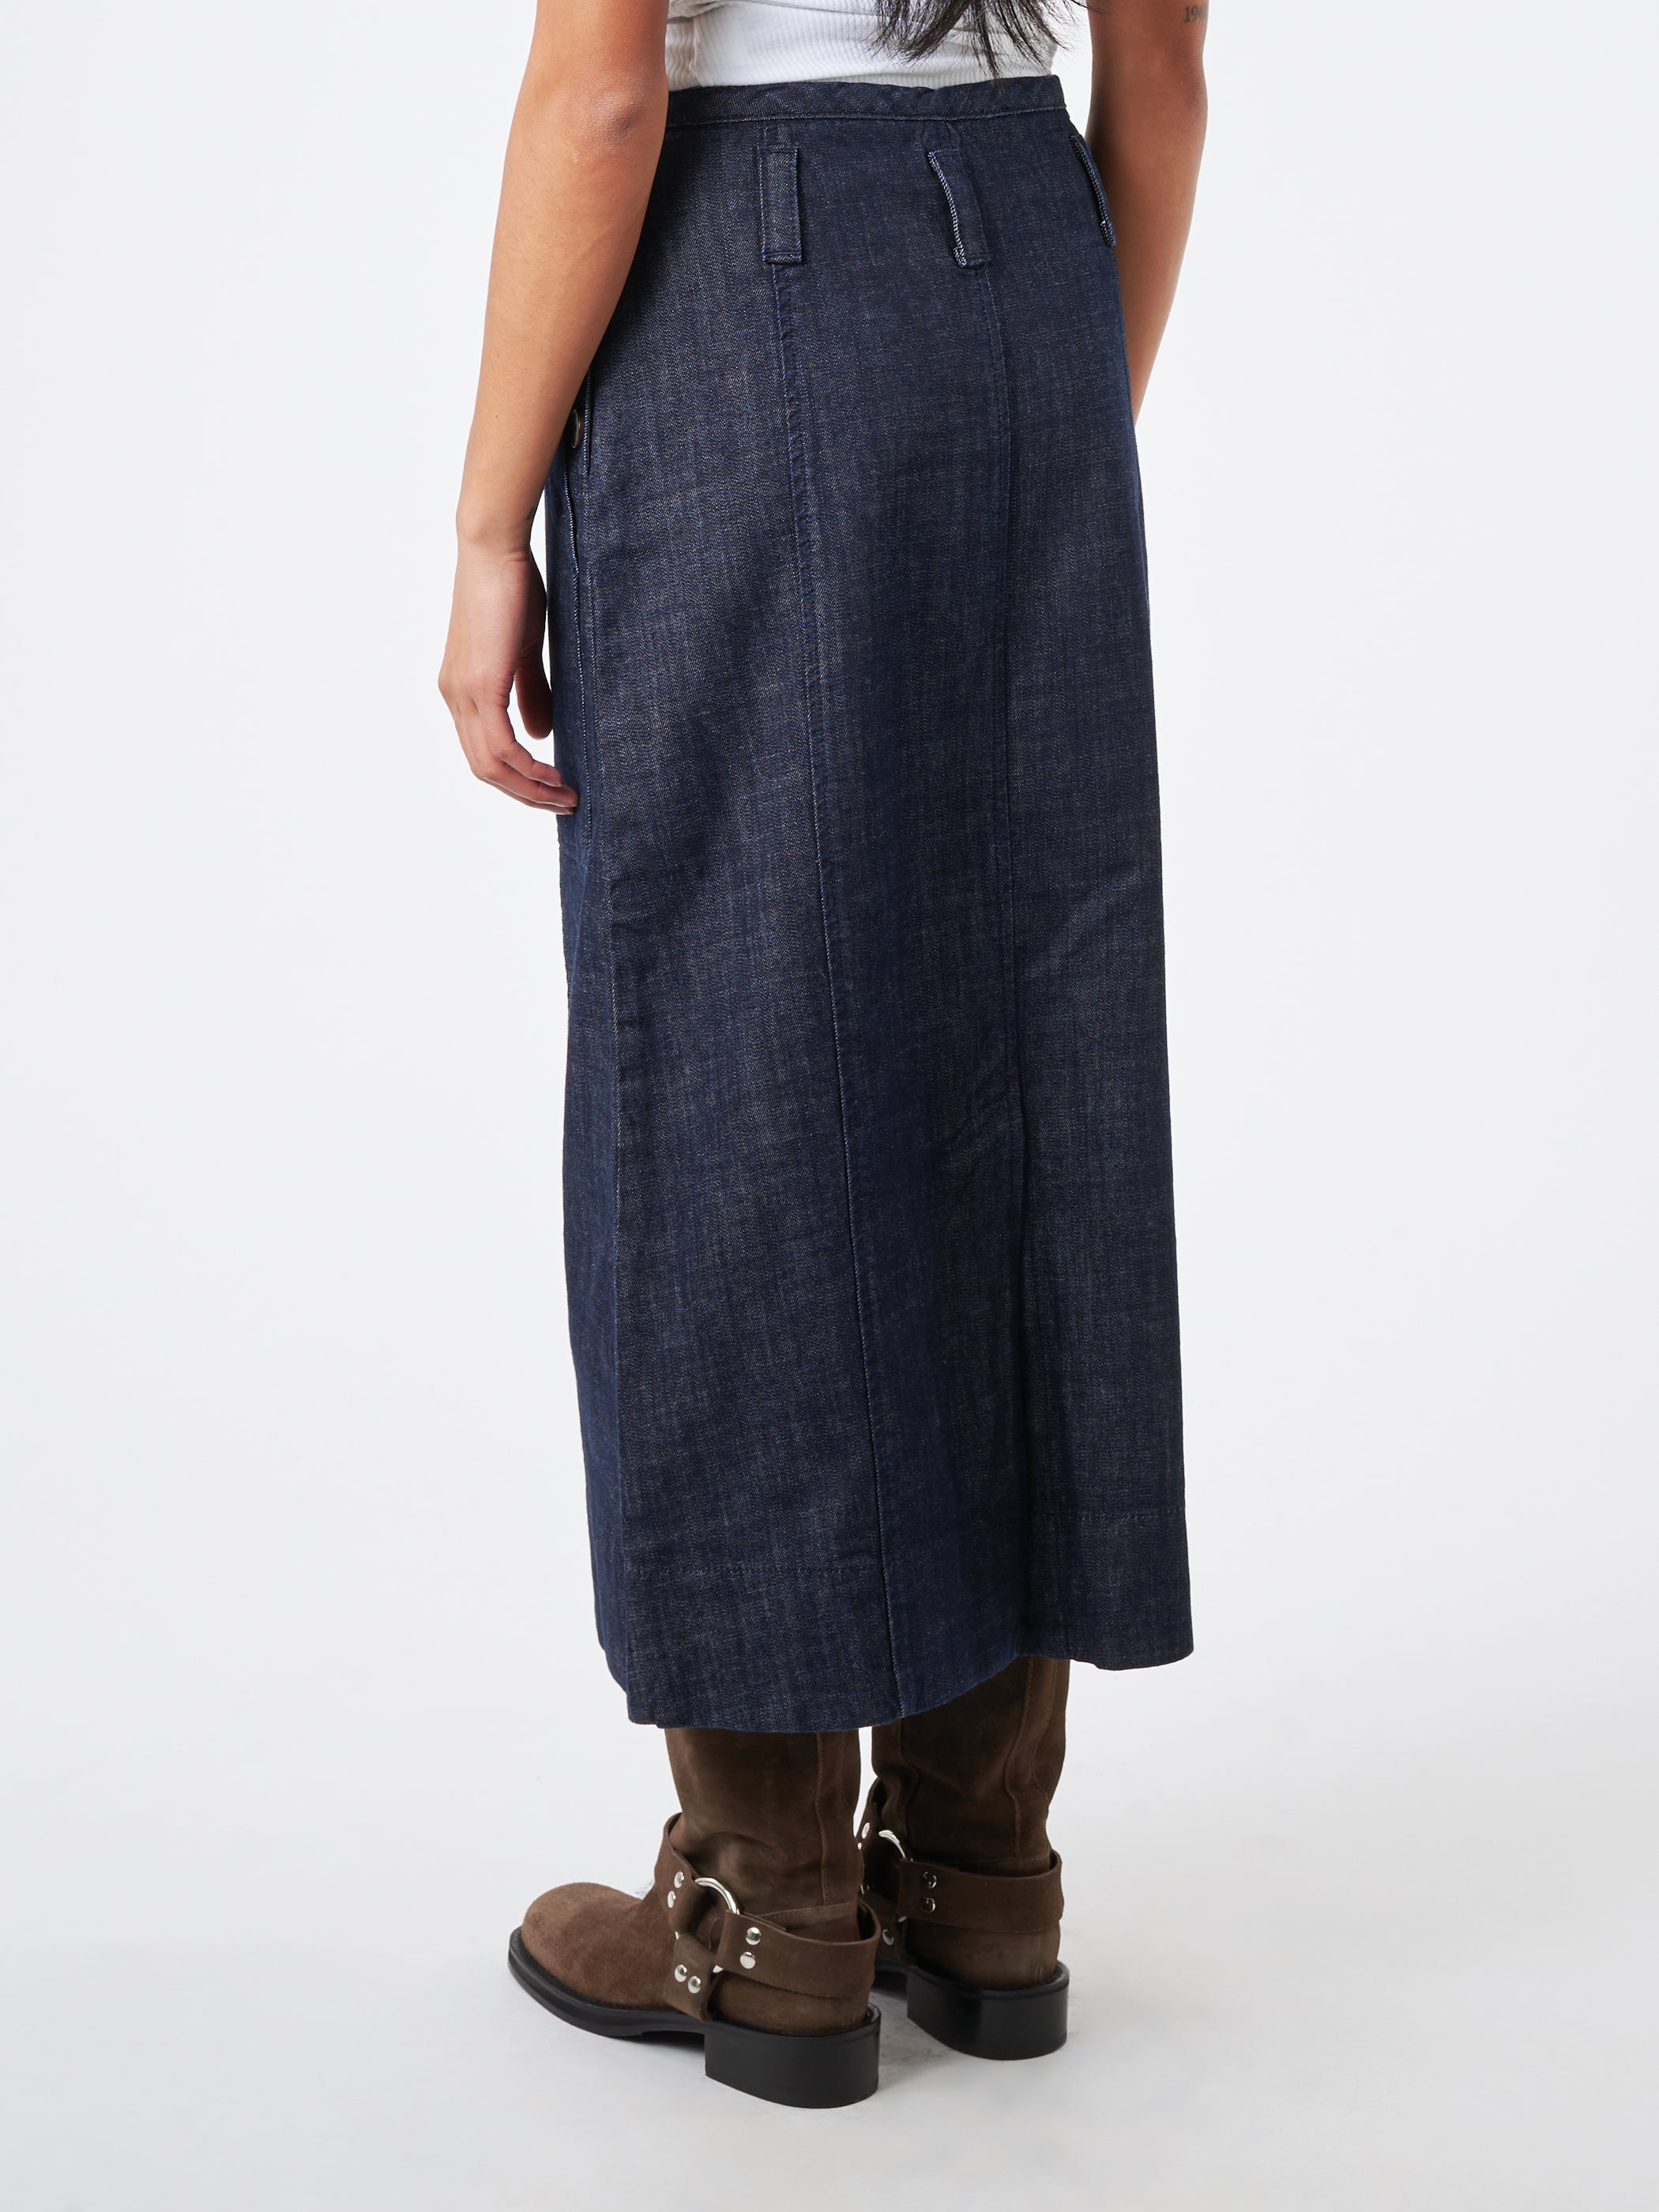 Patch Pocket Organic Denim Skirt